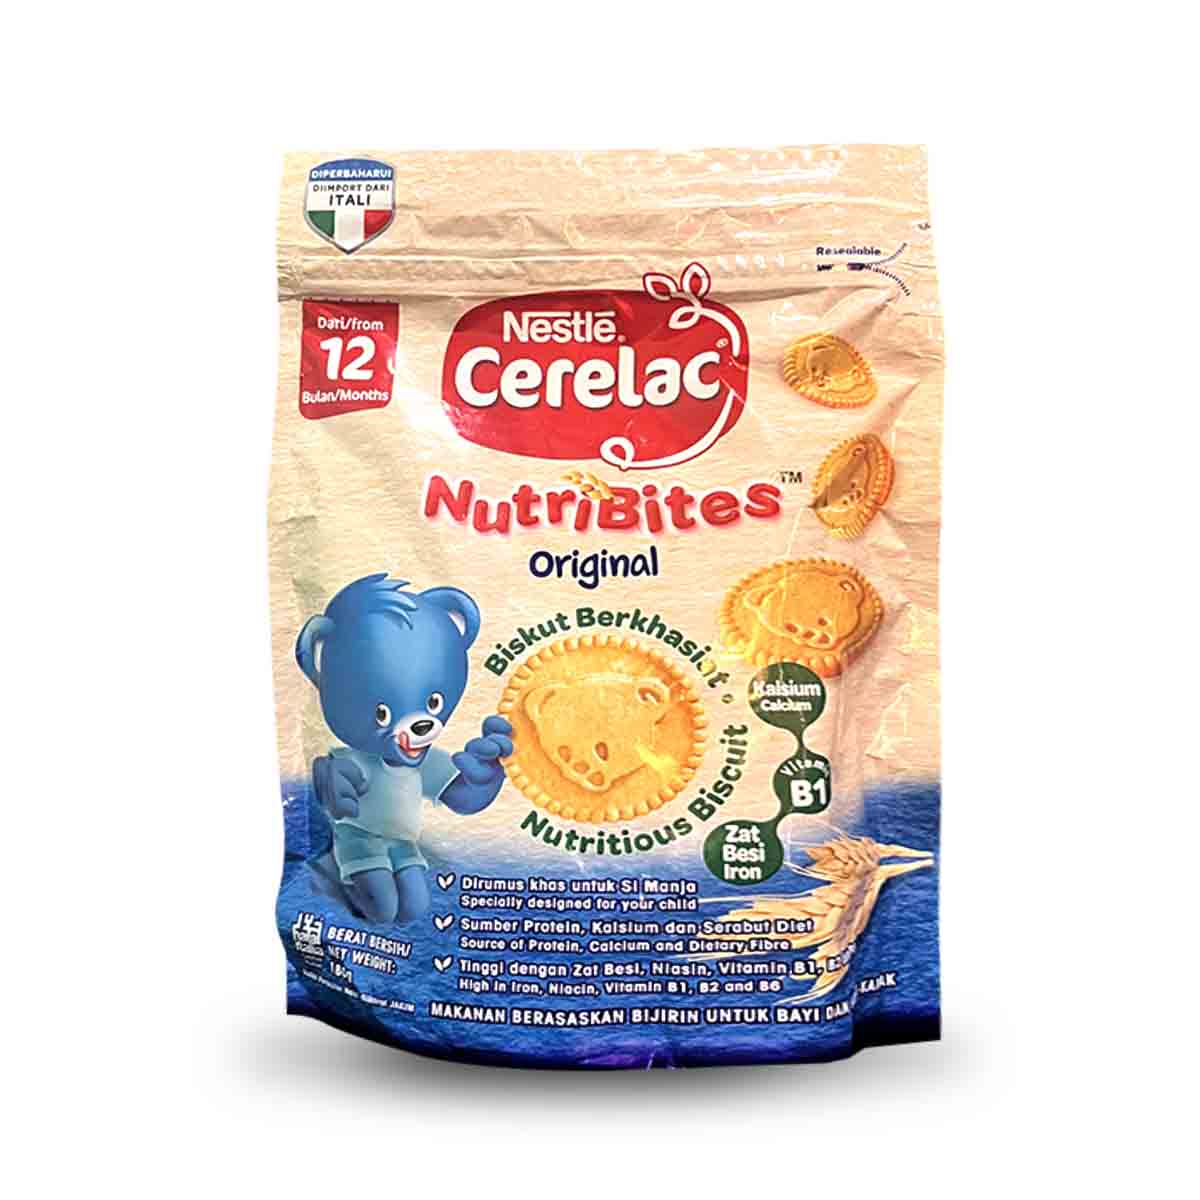 Buy Nestle Cerelac Nutri Bites Original Nutritious Biscuit Baby Snack Online in India at uyyaala.com